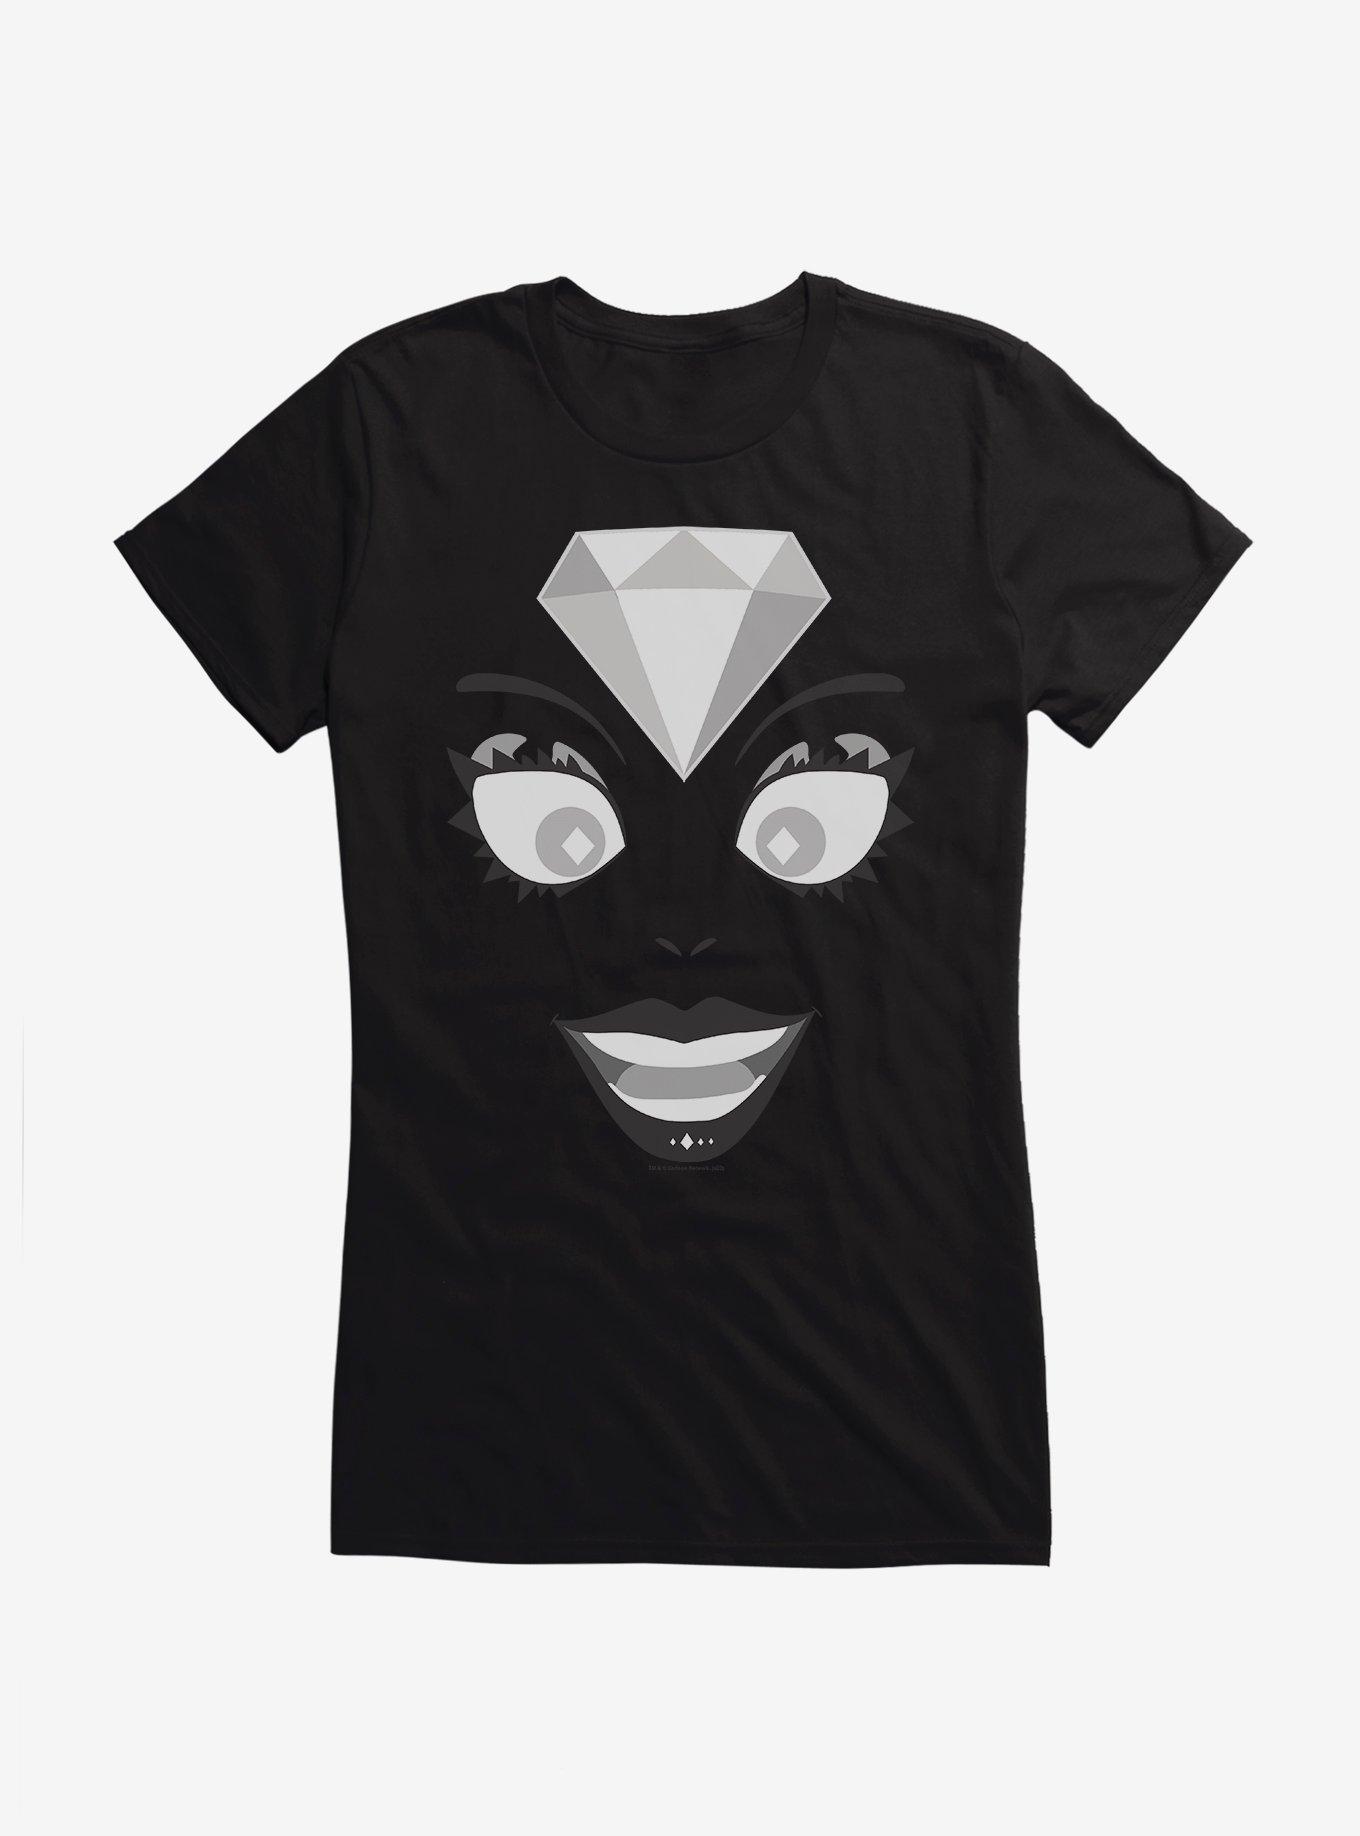 Steven Universe White Diamond Face Girls T-Shirt